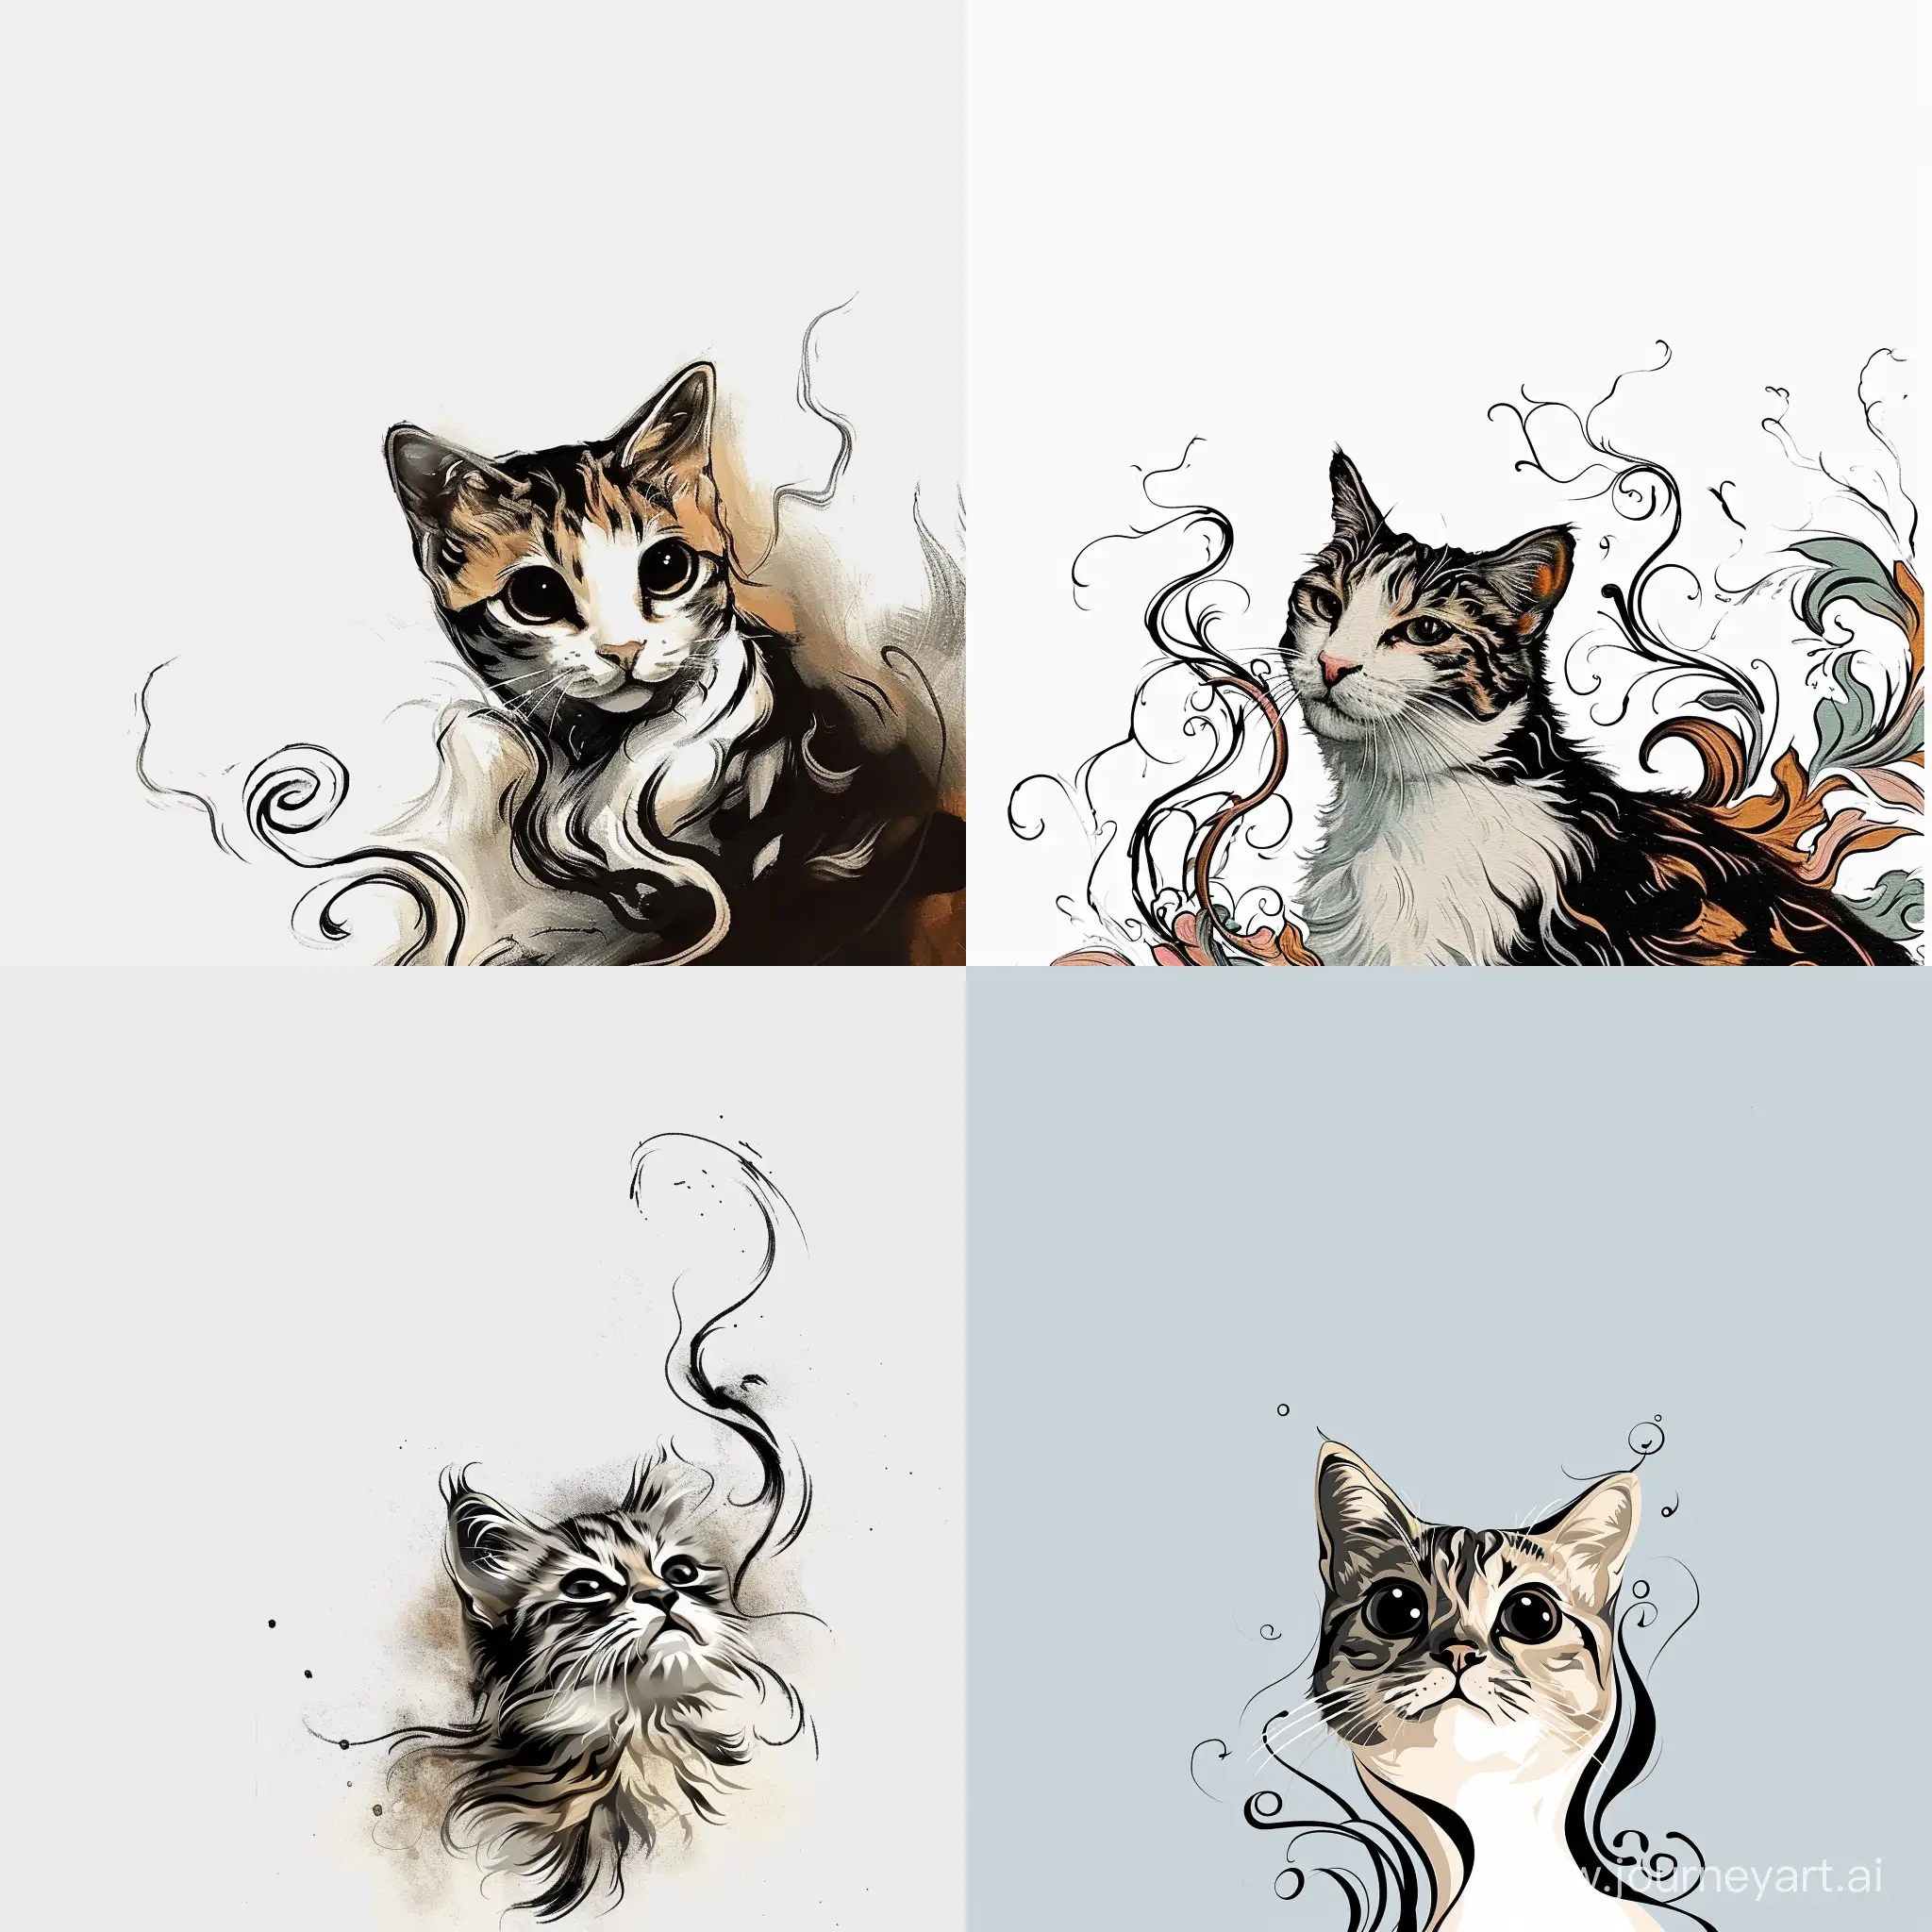 https://i.pinimg.com/564x/9e/d2/a8/9ed2a8df4c17d42a5f8e9d5da0249dd1.jpg, кот в таком стиле